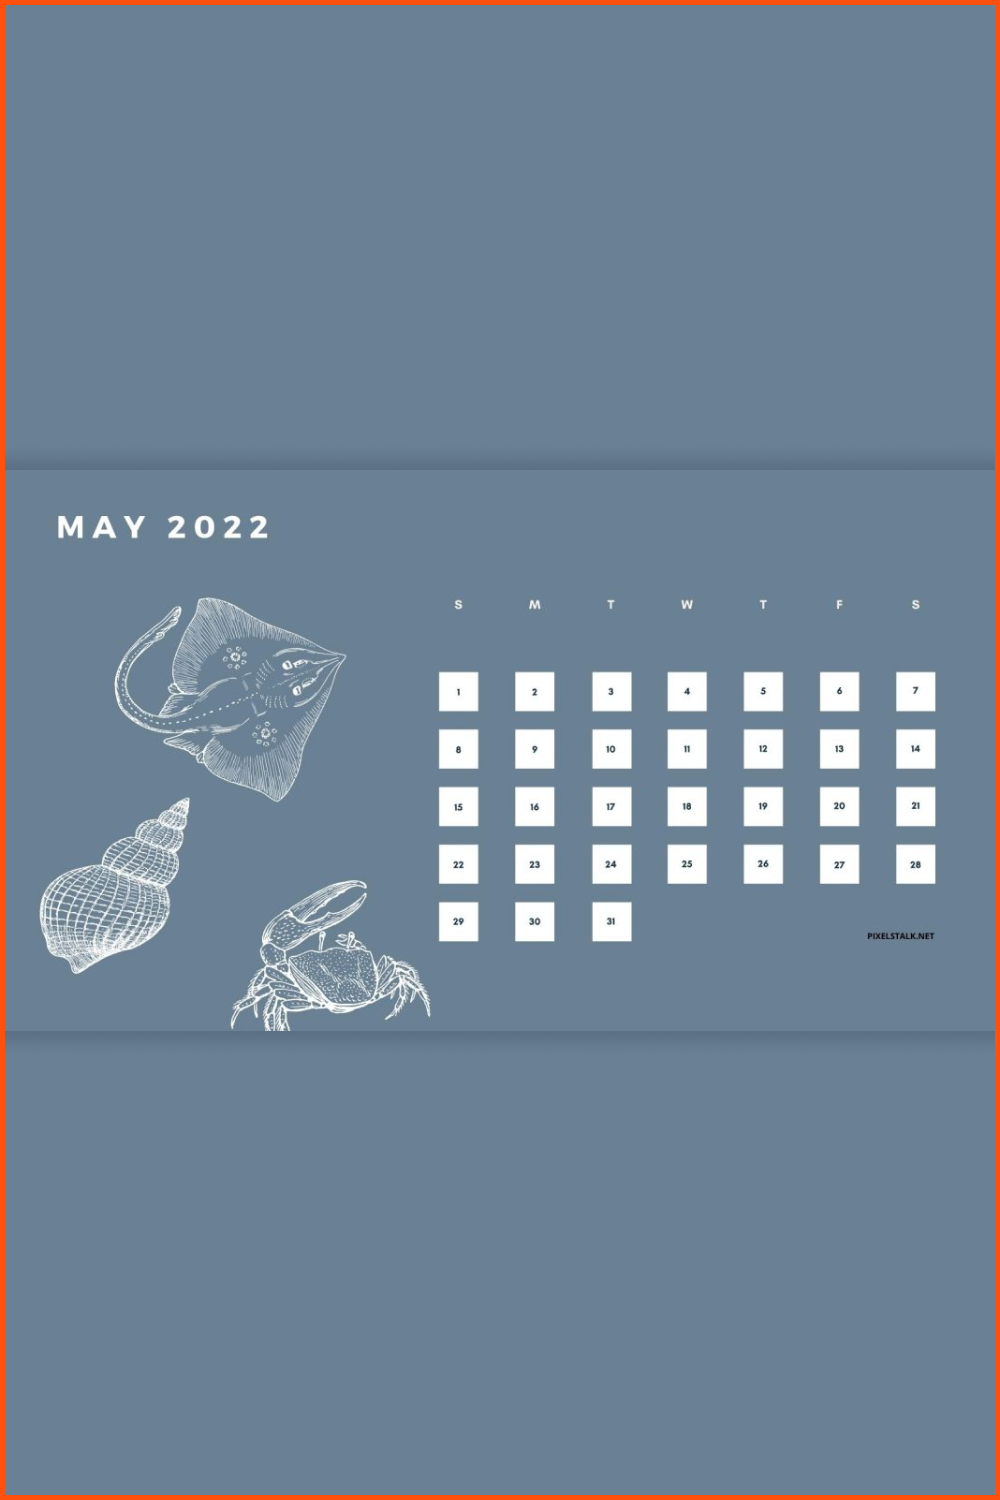 May 2022 Calendar Printable Free.